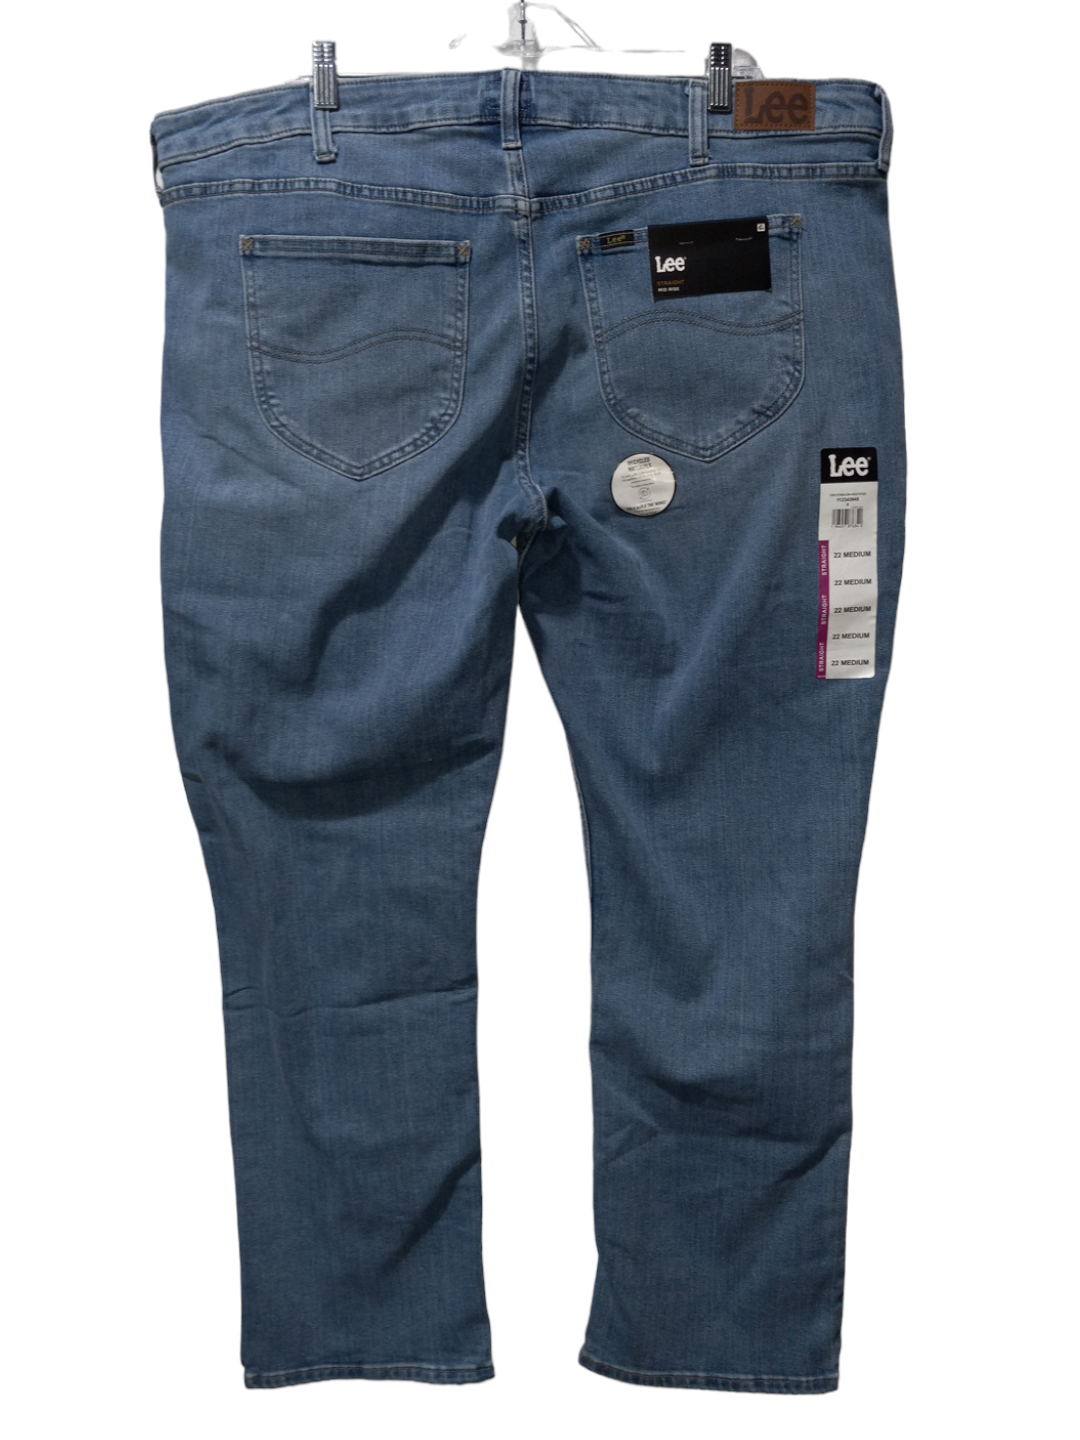 Blue Denim Jeans Straight Lee, Size 2x